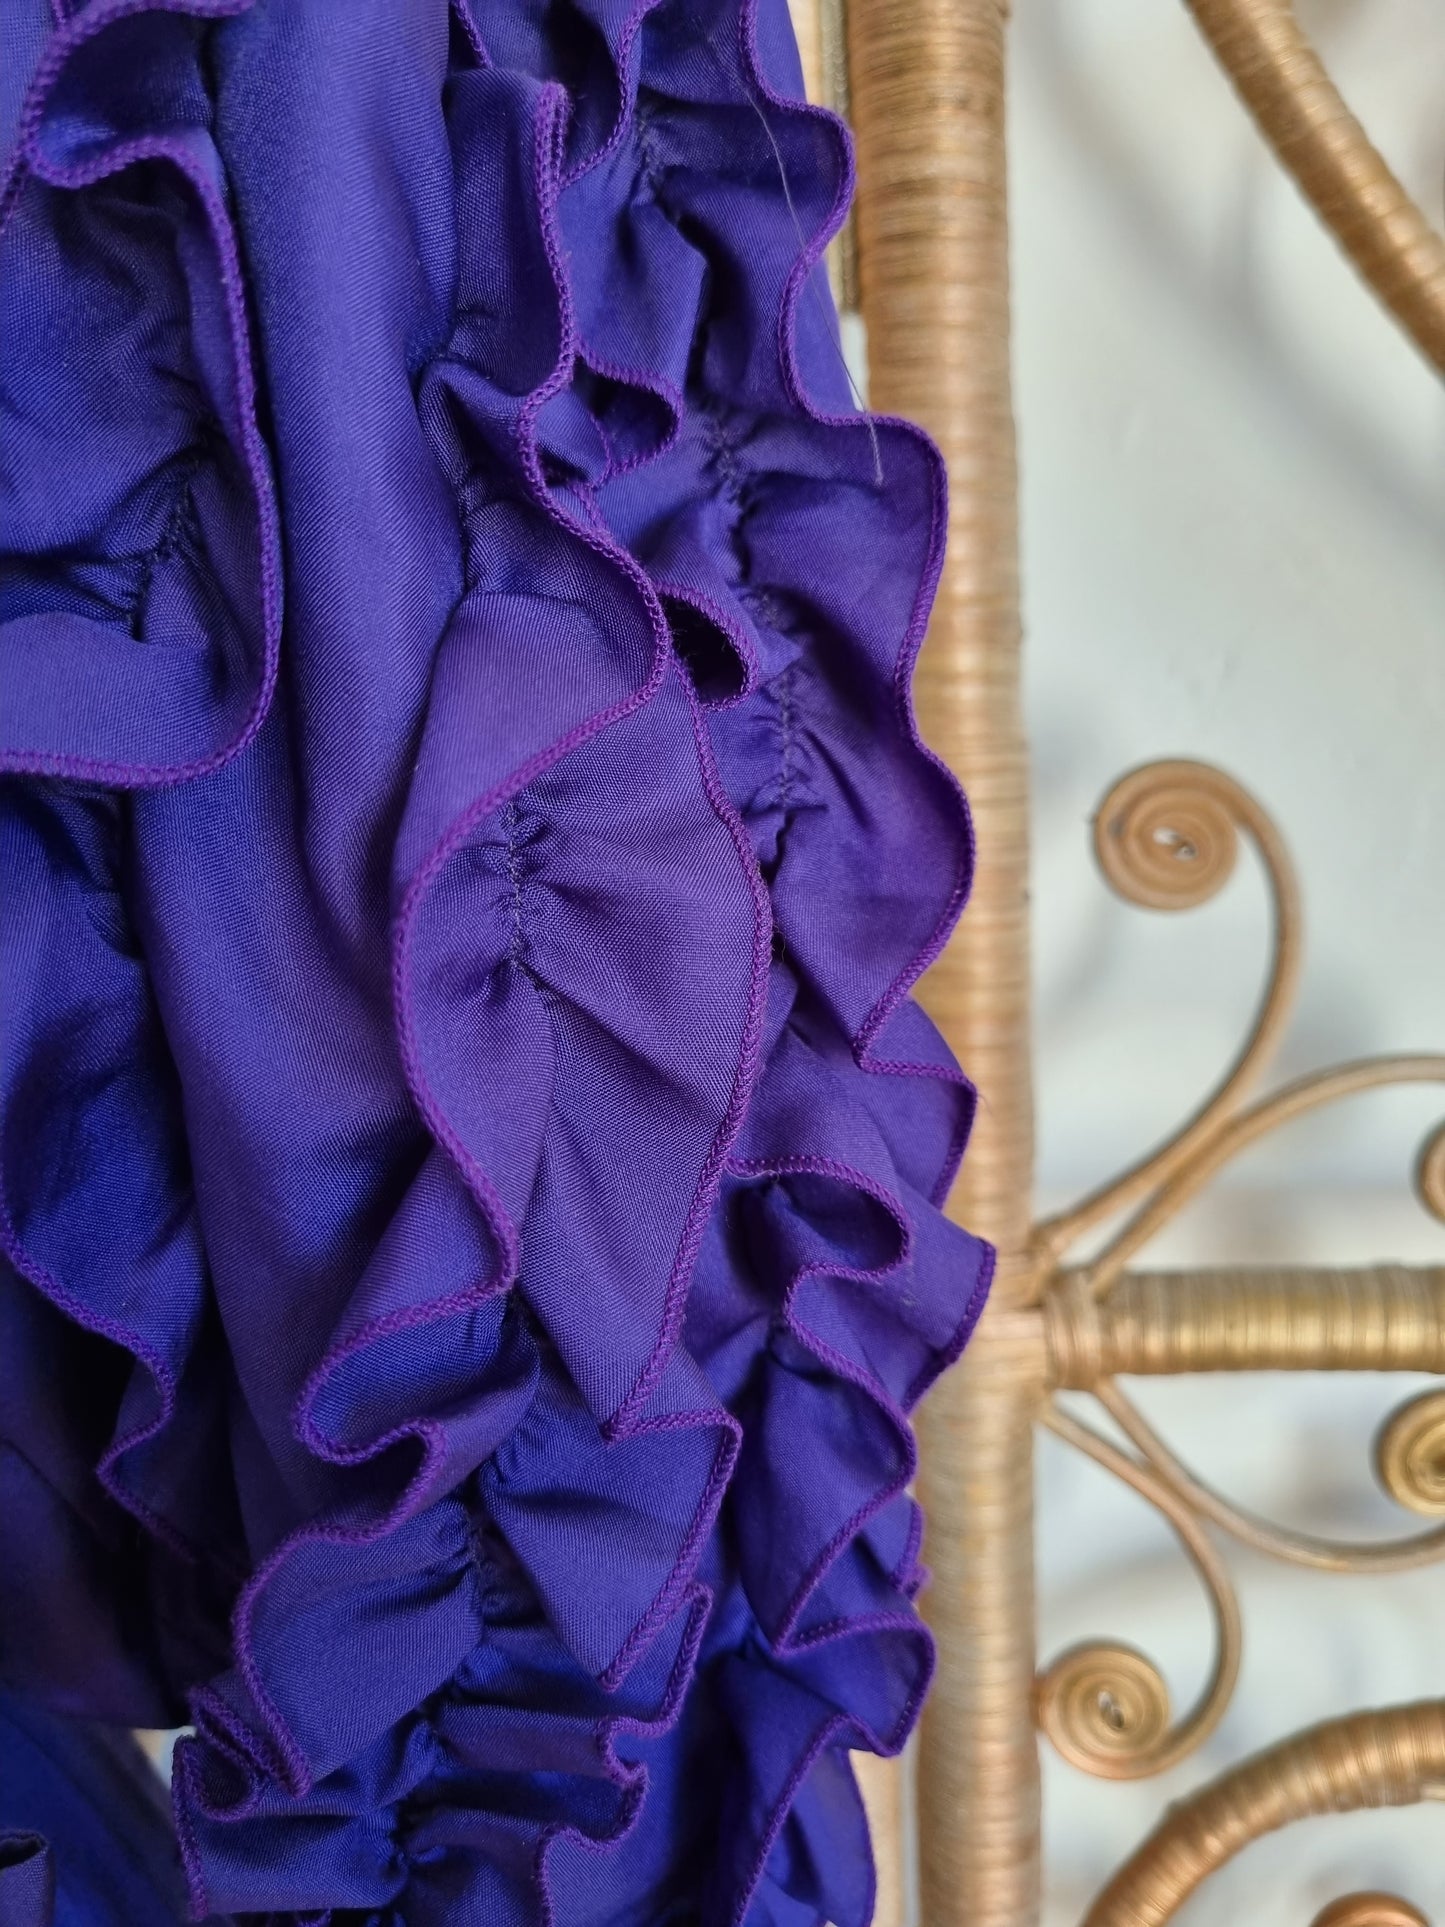 Vintage purple prairie dress